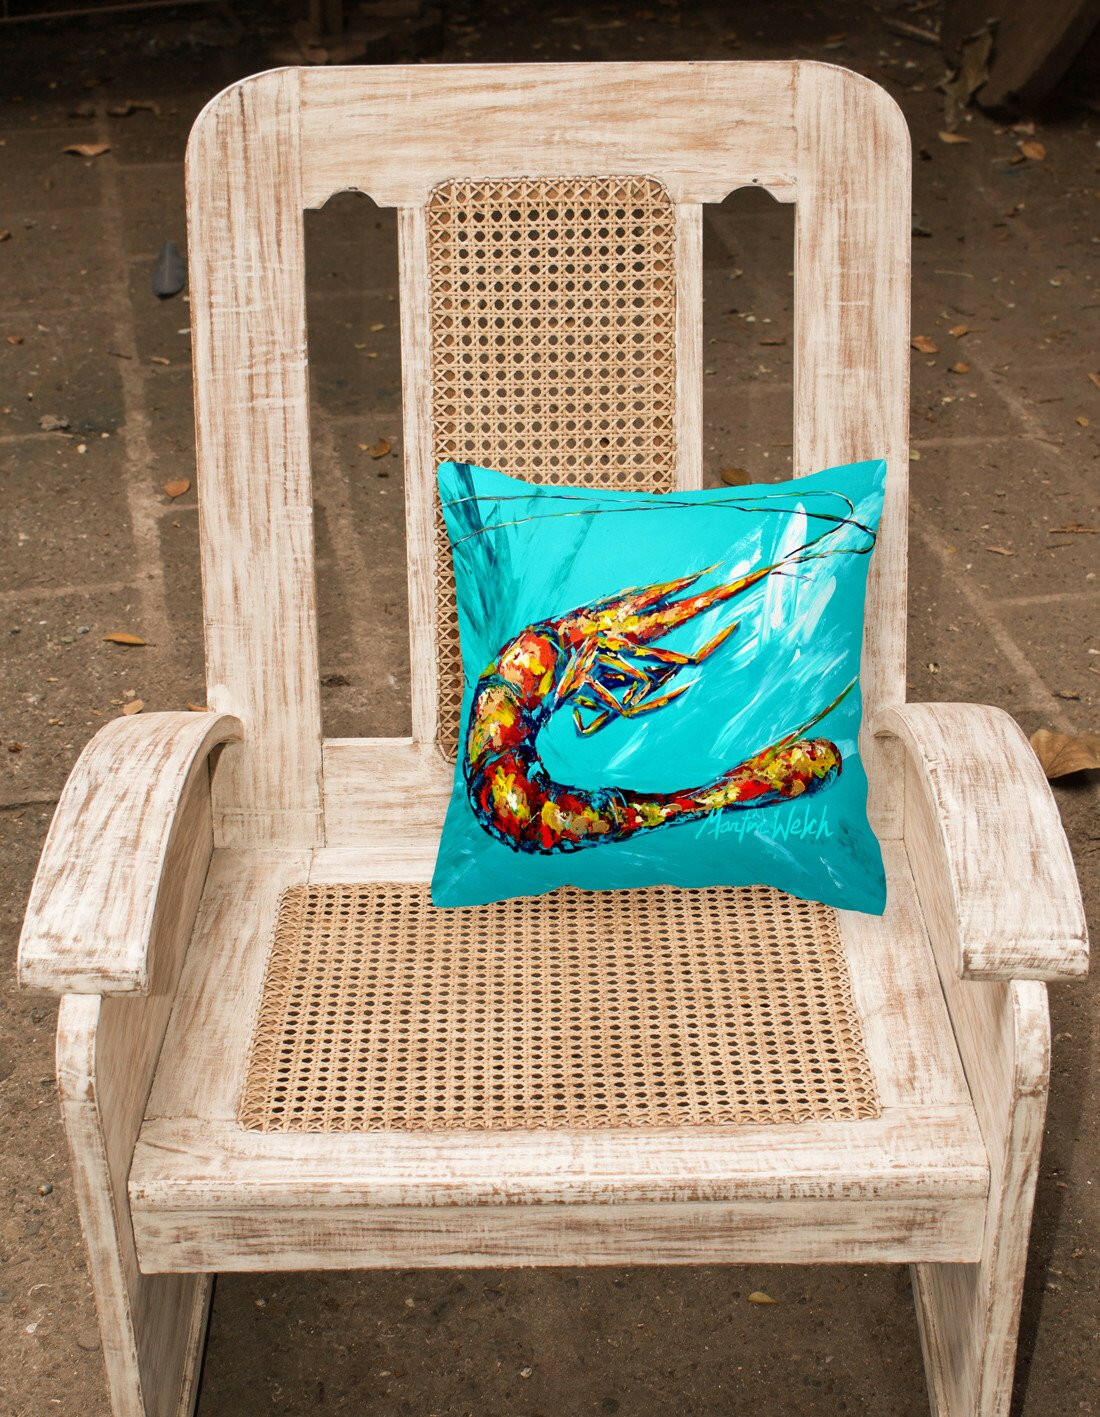 Shrimp Teal Splish Splash Canvas Fabric Decorative Pillow MW1130PW1414 by Caroline's Treasures